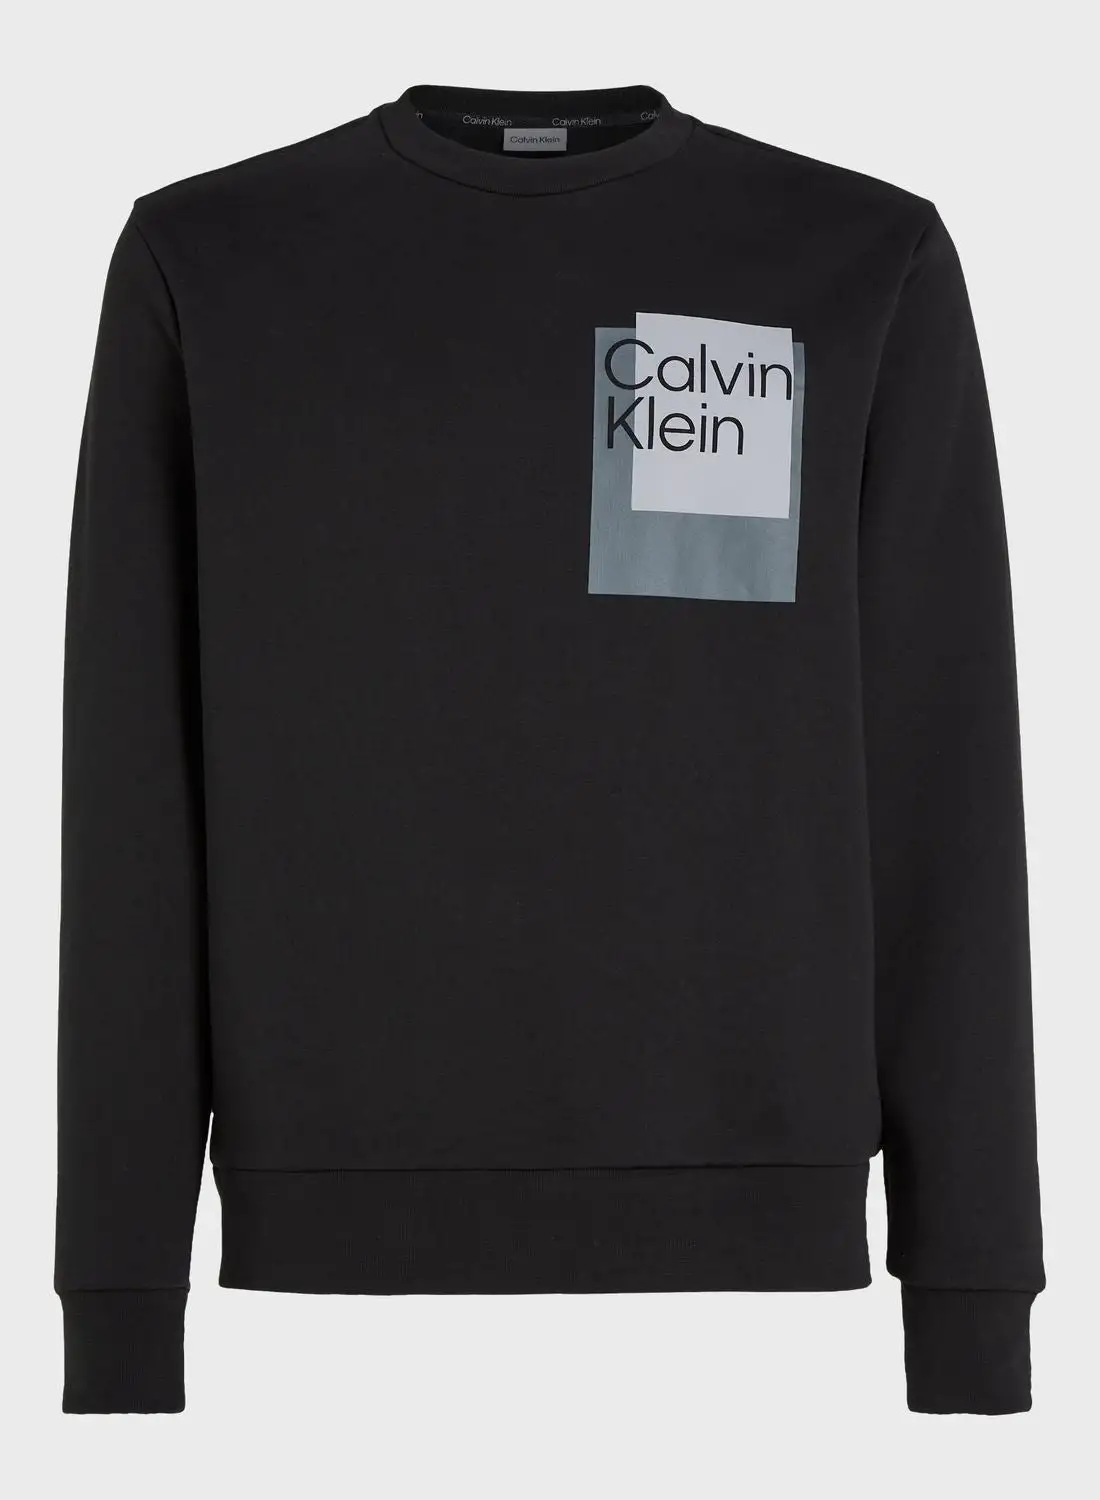 CALVIN KLEIN Logo Sweatshirt